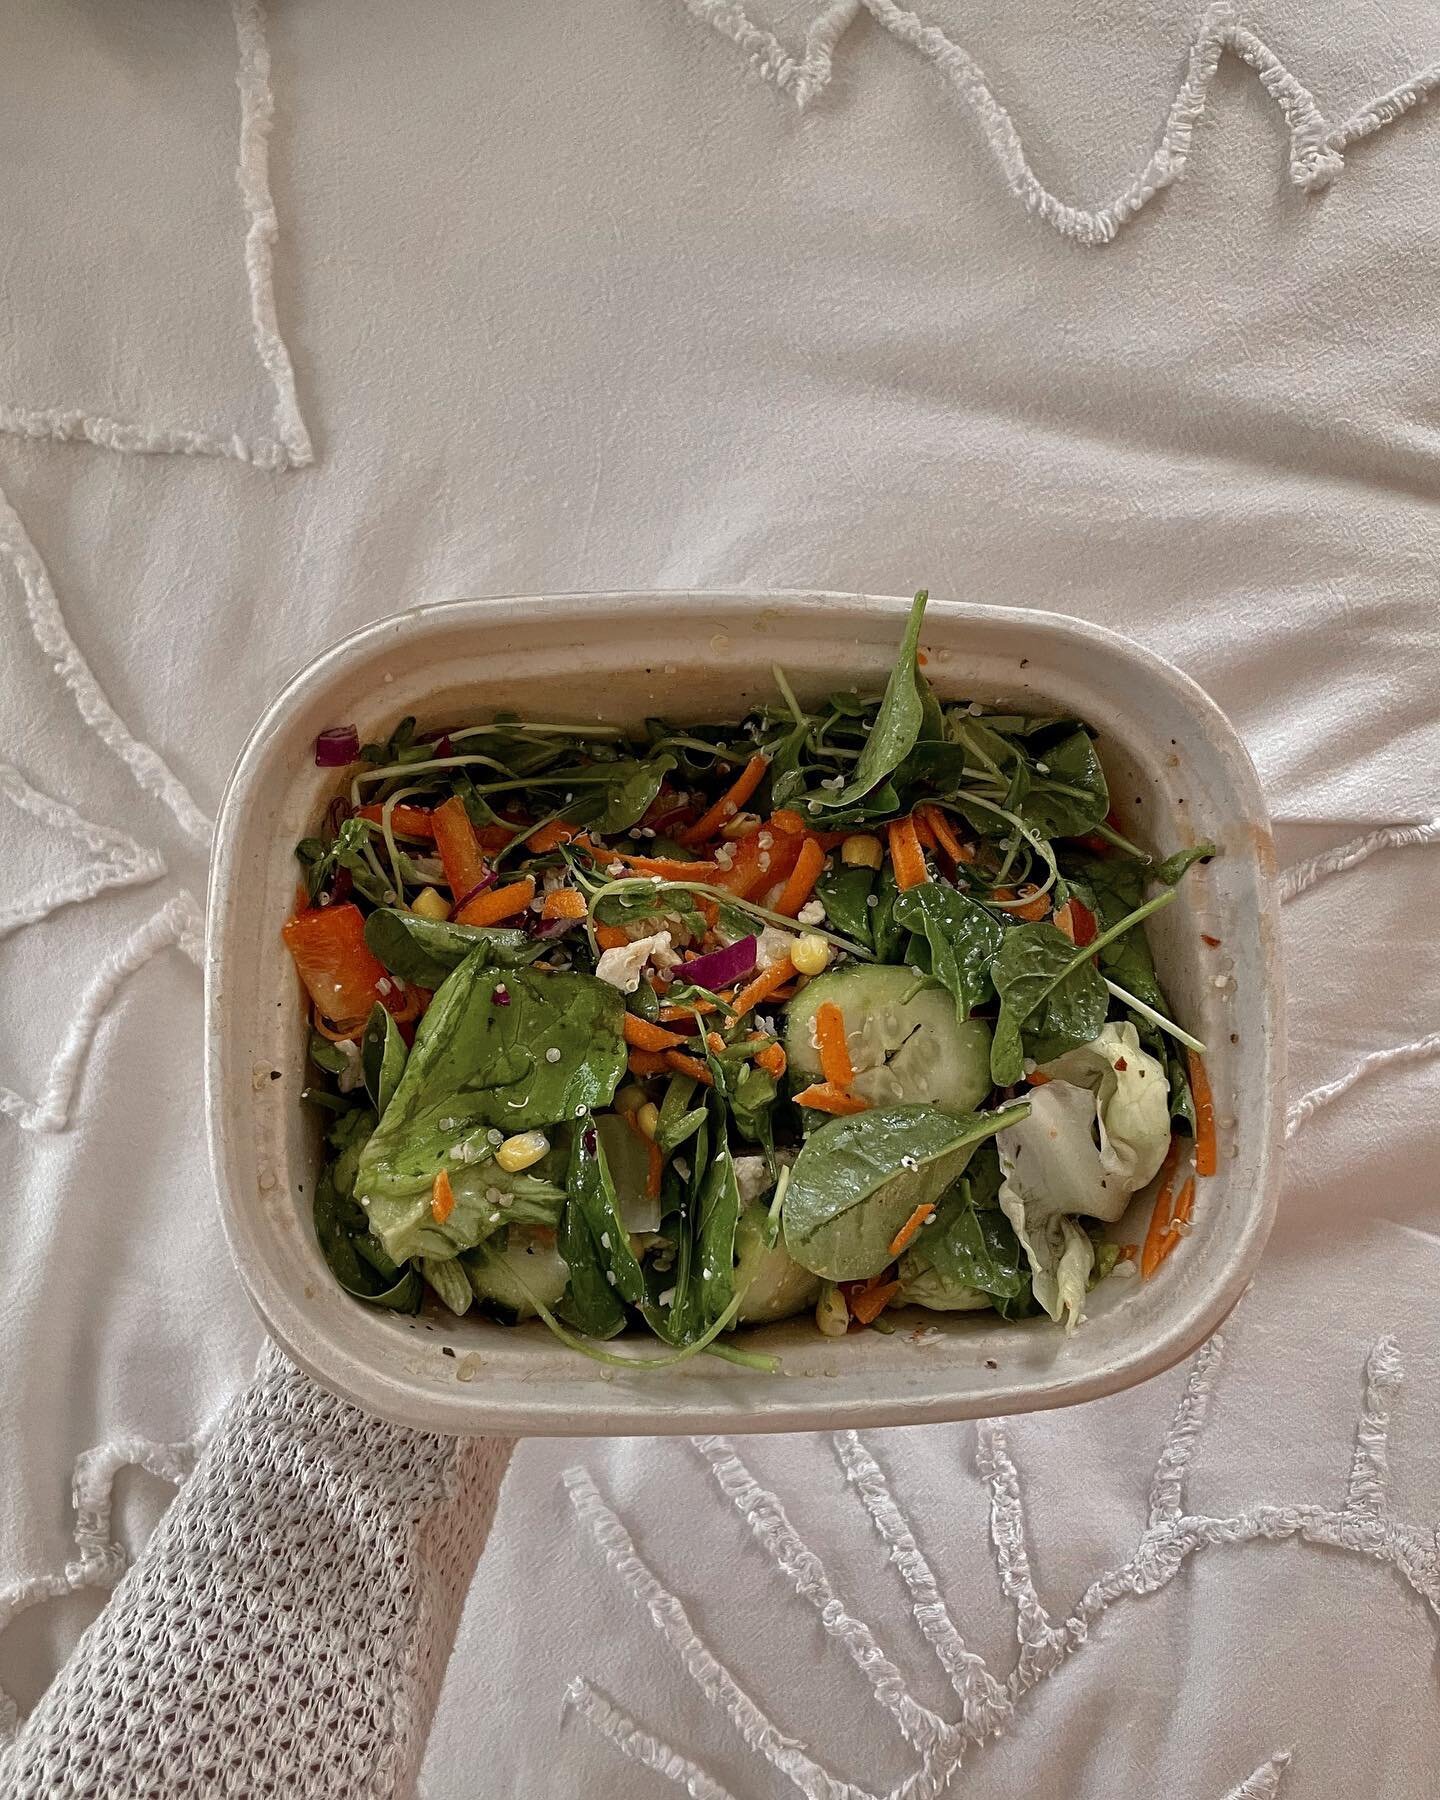 Summer greens🥬🌱

Balanced bowl
-butter lettuce/spinach mix
-microgreens
-quinoa
-roasted chicken 
-feta
-corn
-peppers
-cucumbers
-carrots
-@primalkitchenfoods dreamy Italian dressing 

#salad #greens #summerglow #nourish #eatwell #micronutrients #